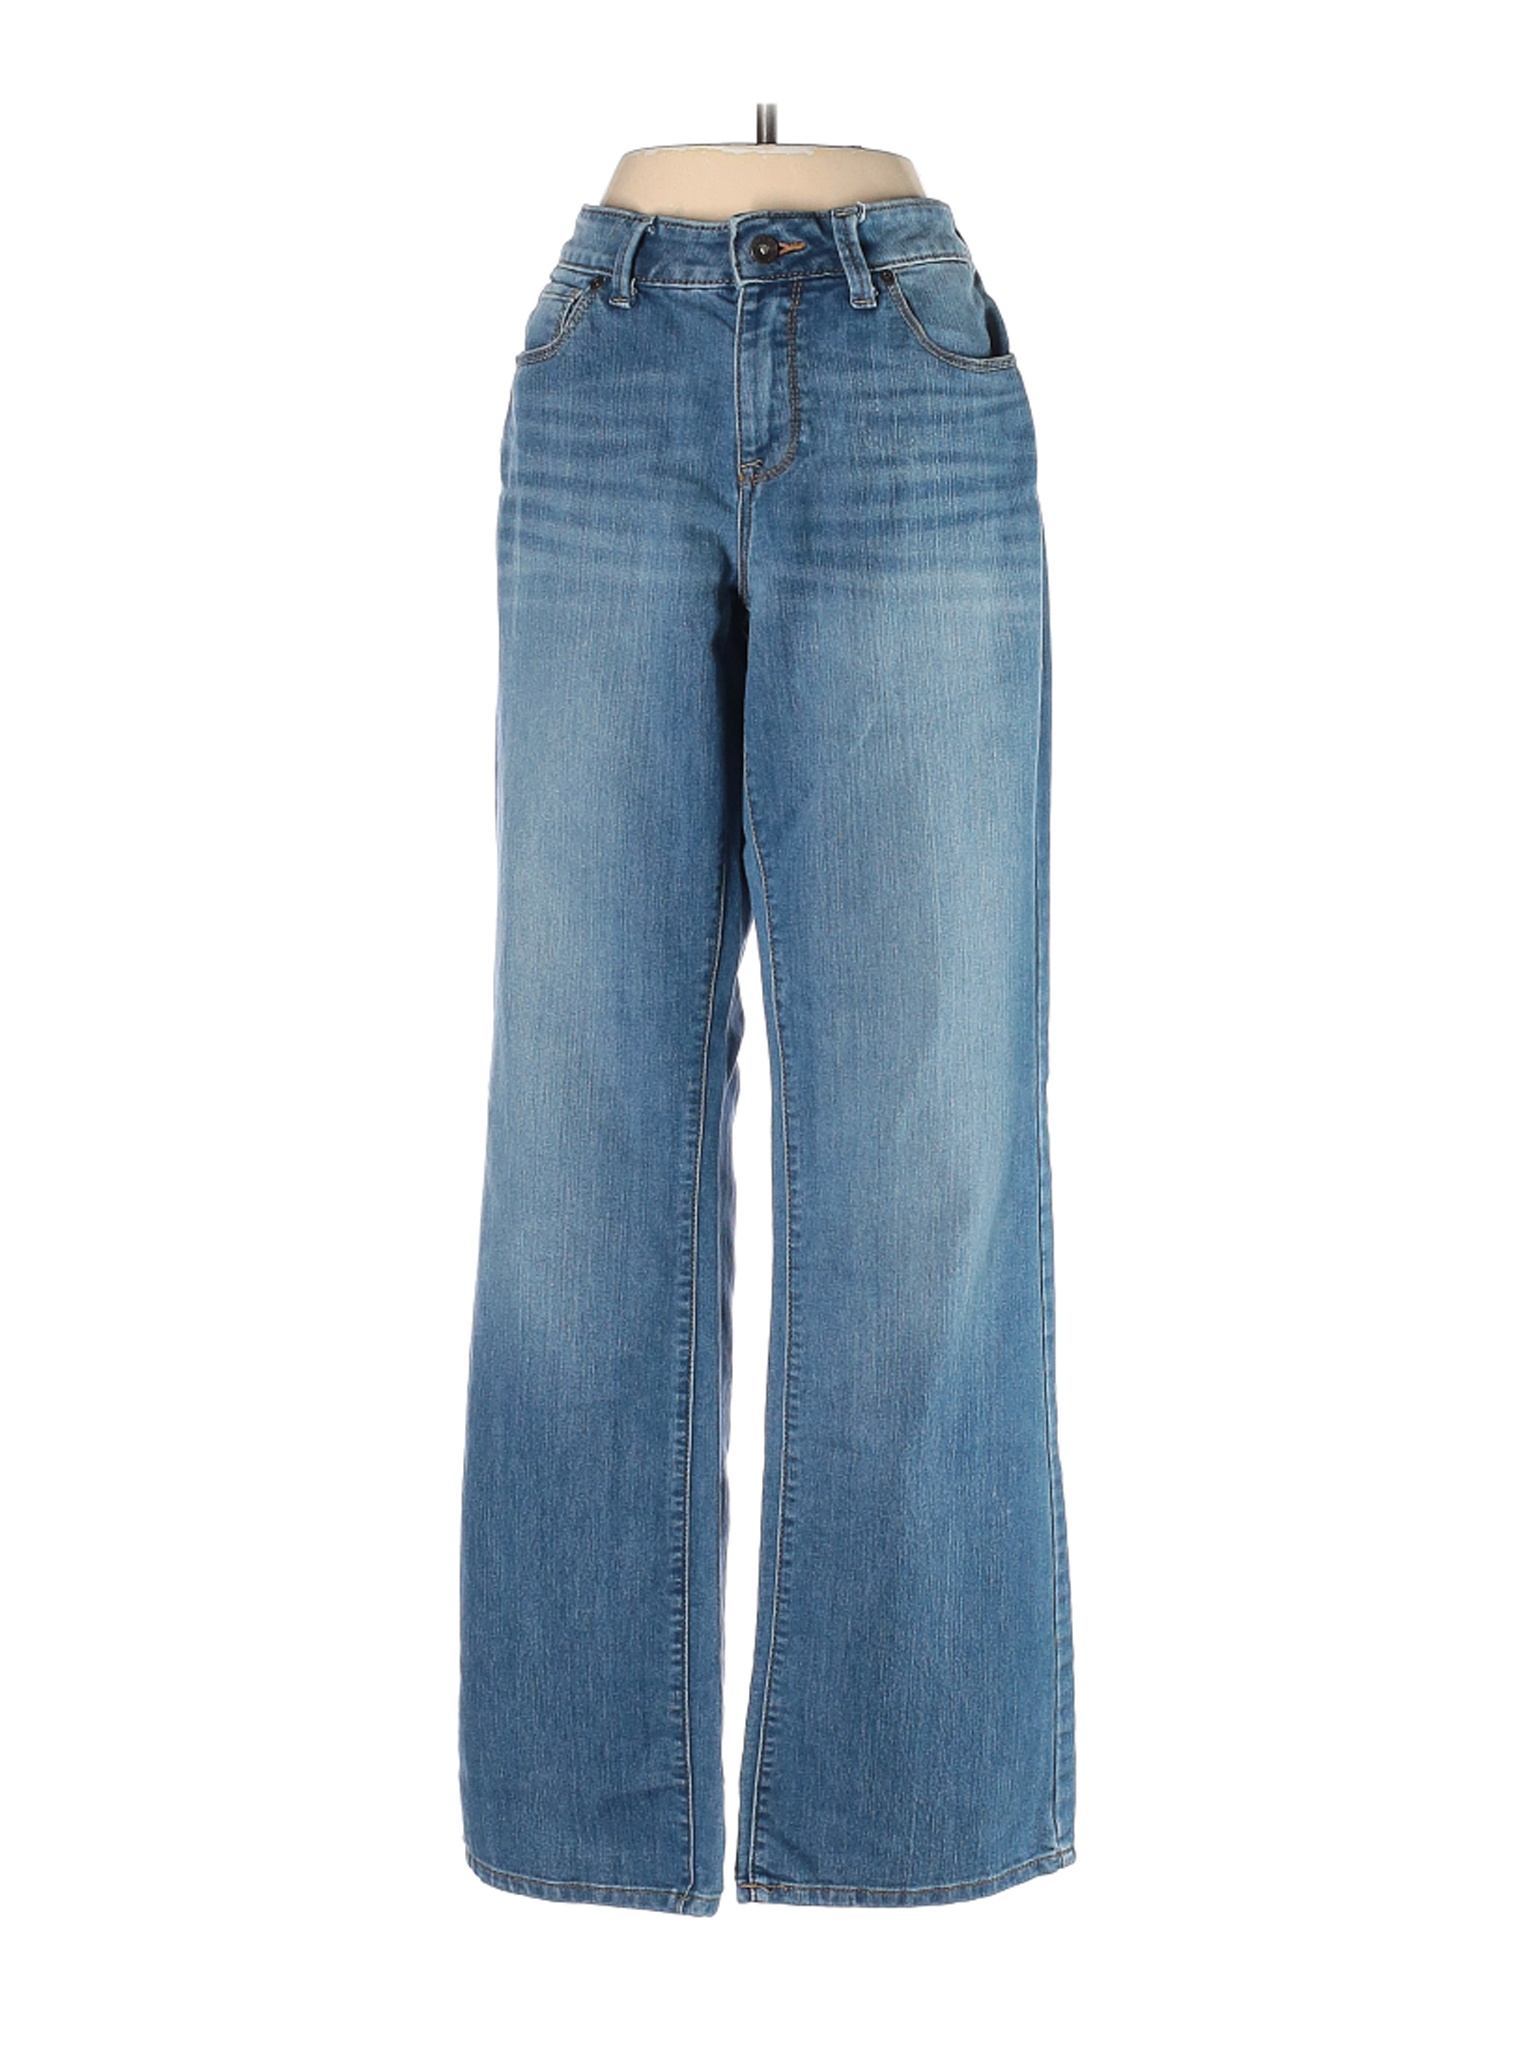 SONOMA life + style Women Blue Jeans 8 | eBay